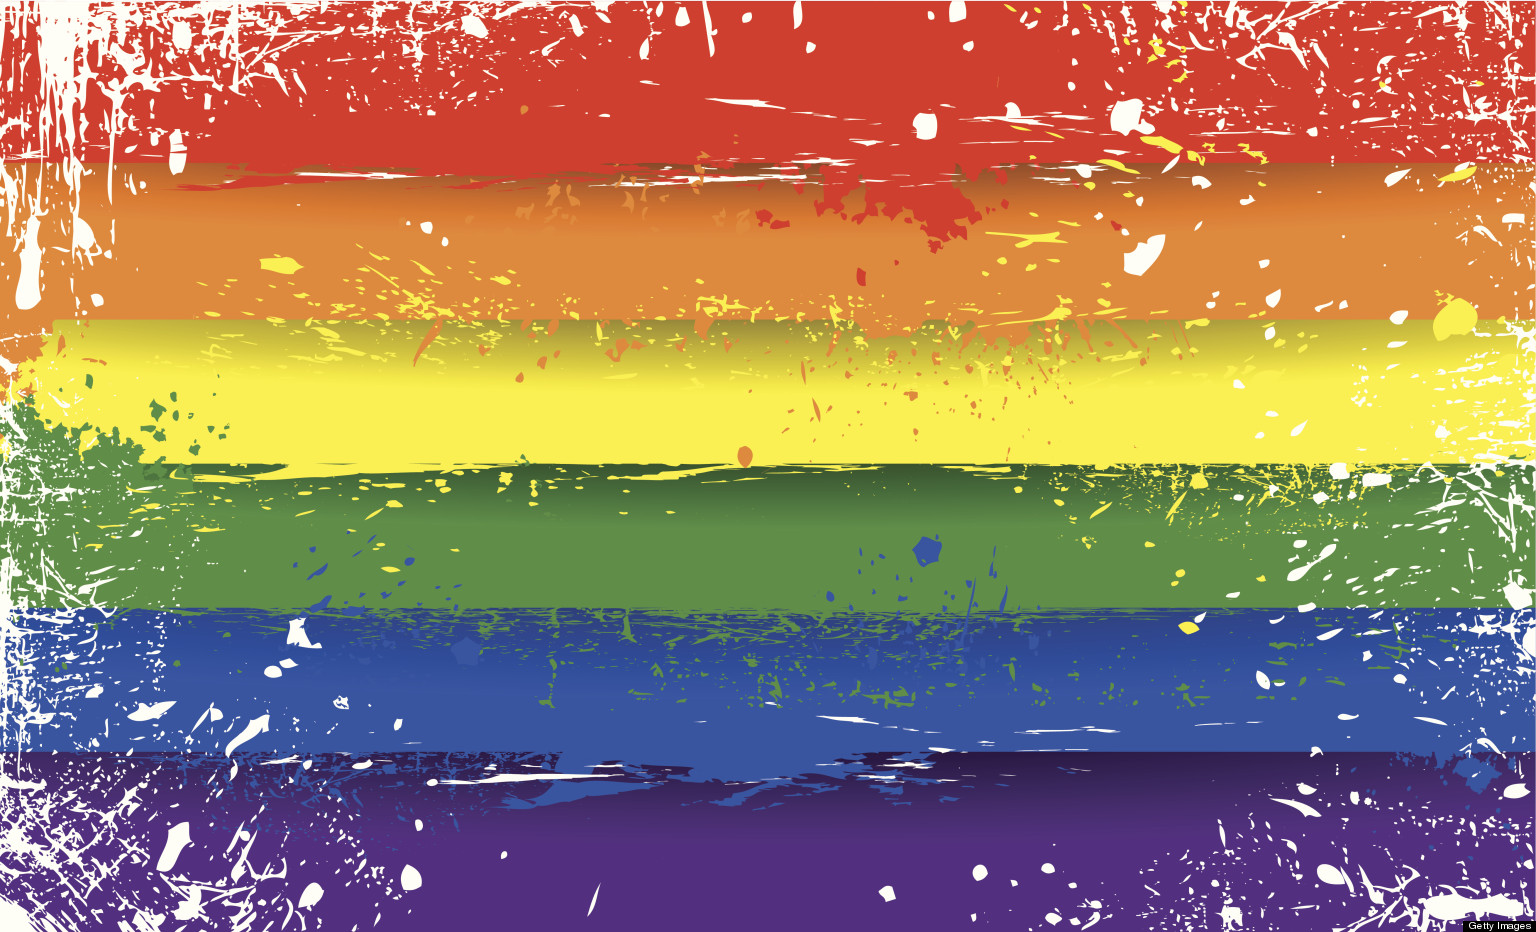 Bisexual Pride Cover O lgbt pride facebookjpg